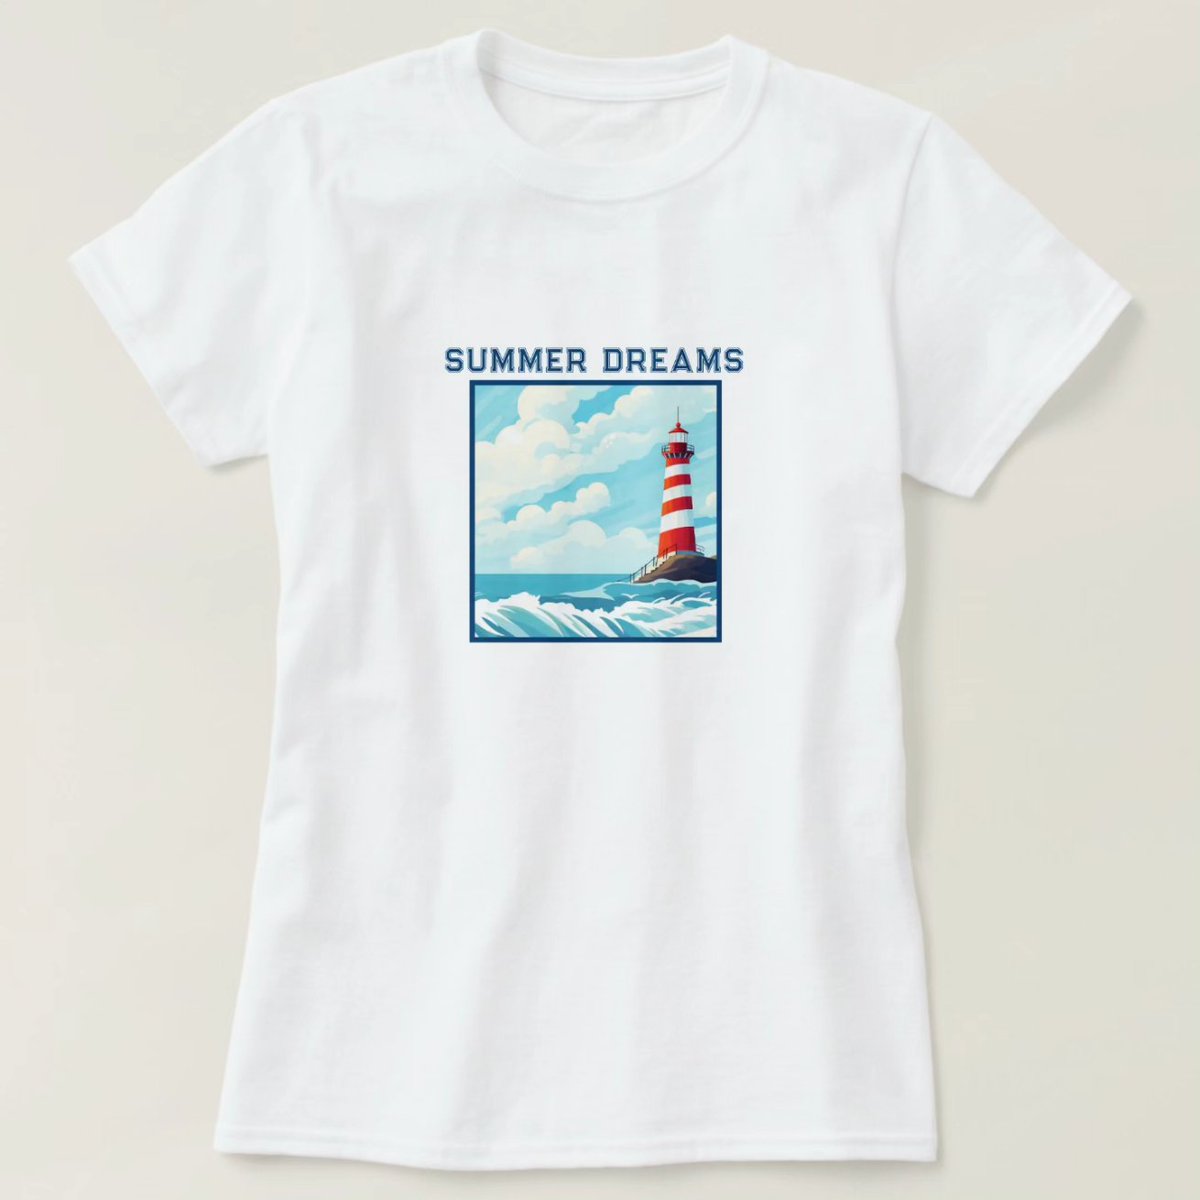 'Summer Dreams by the Sea' Lighthouse T-Shirt

#summerdreams #lighthouse #coastallife #ocean #inspired #seaside #escape #beach #nauticalstyle #summerfashion #vacation #dreams #beachlife